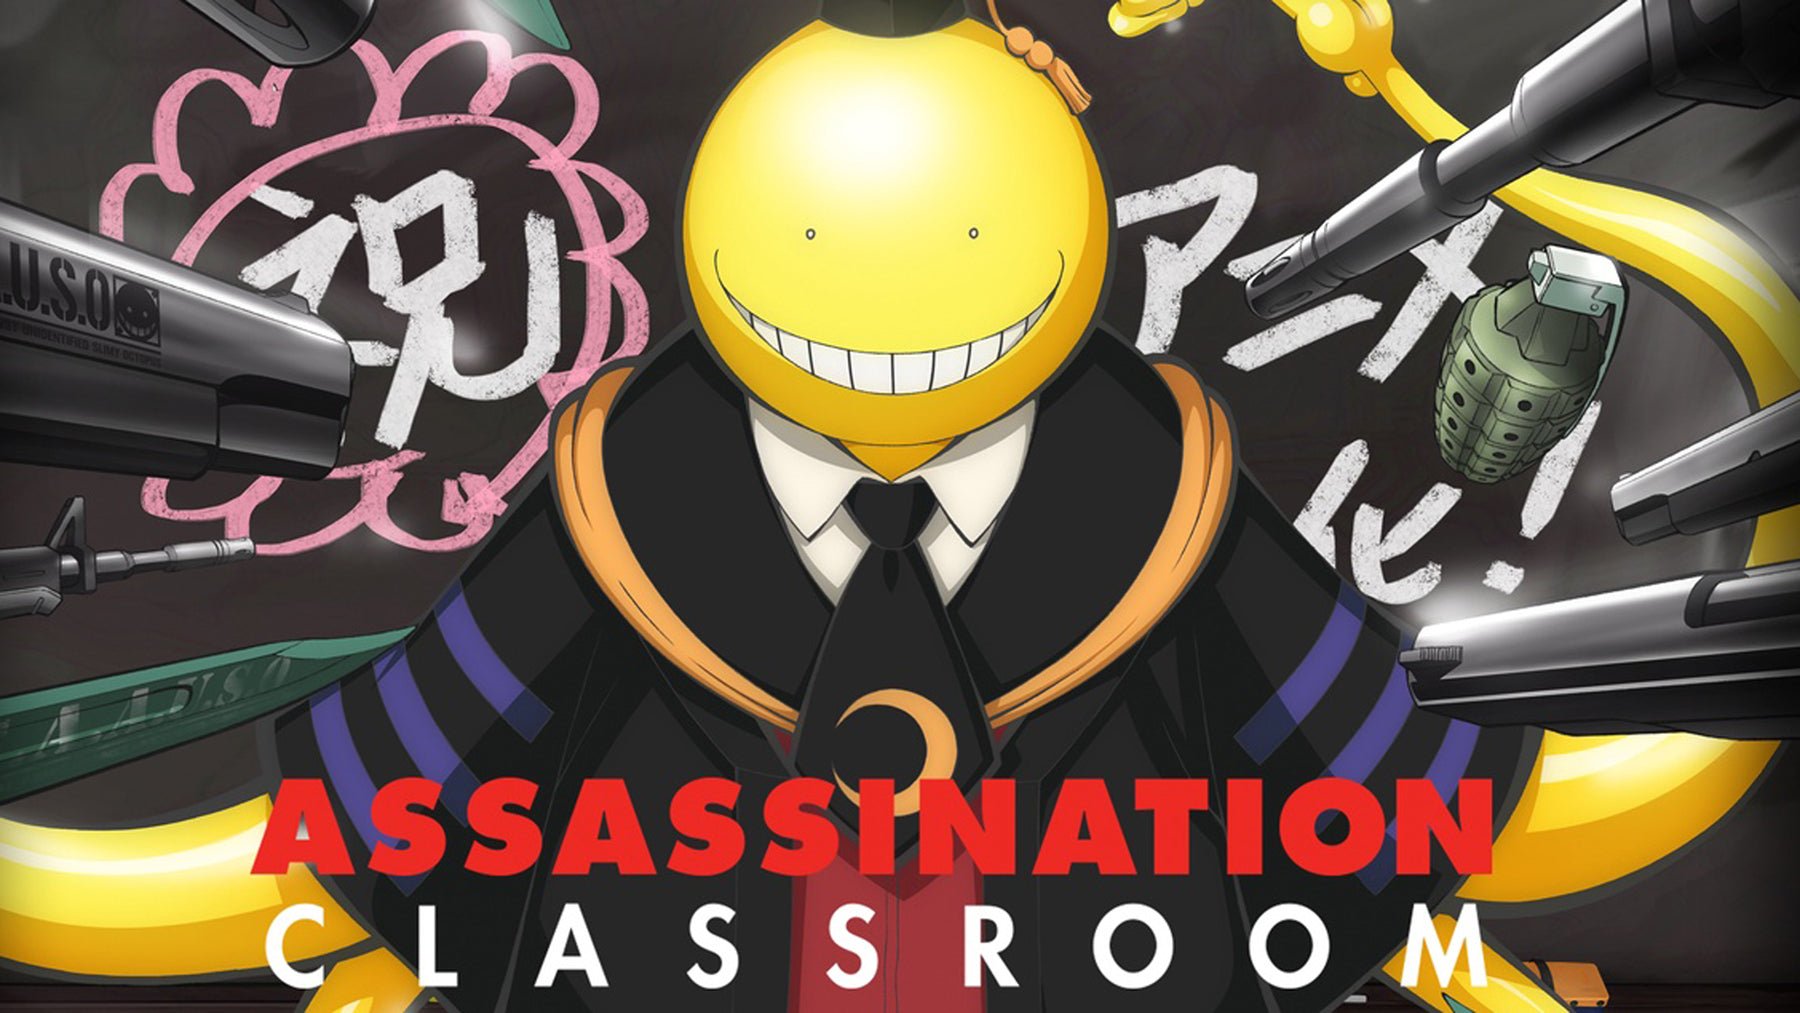 Assassination Classroom Spinoff Manga Koro Teacher Quest! Gets